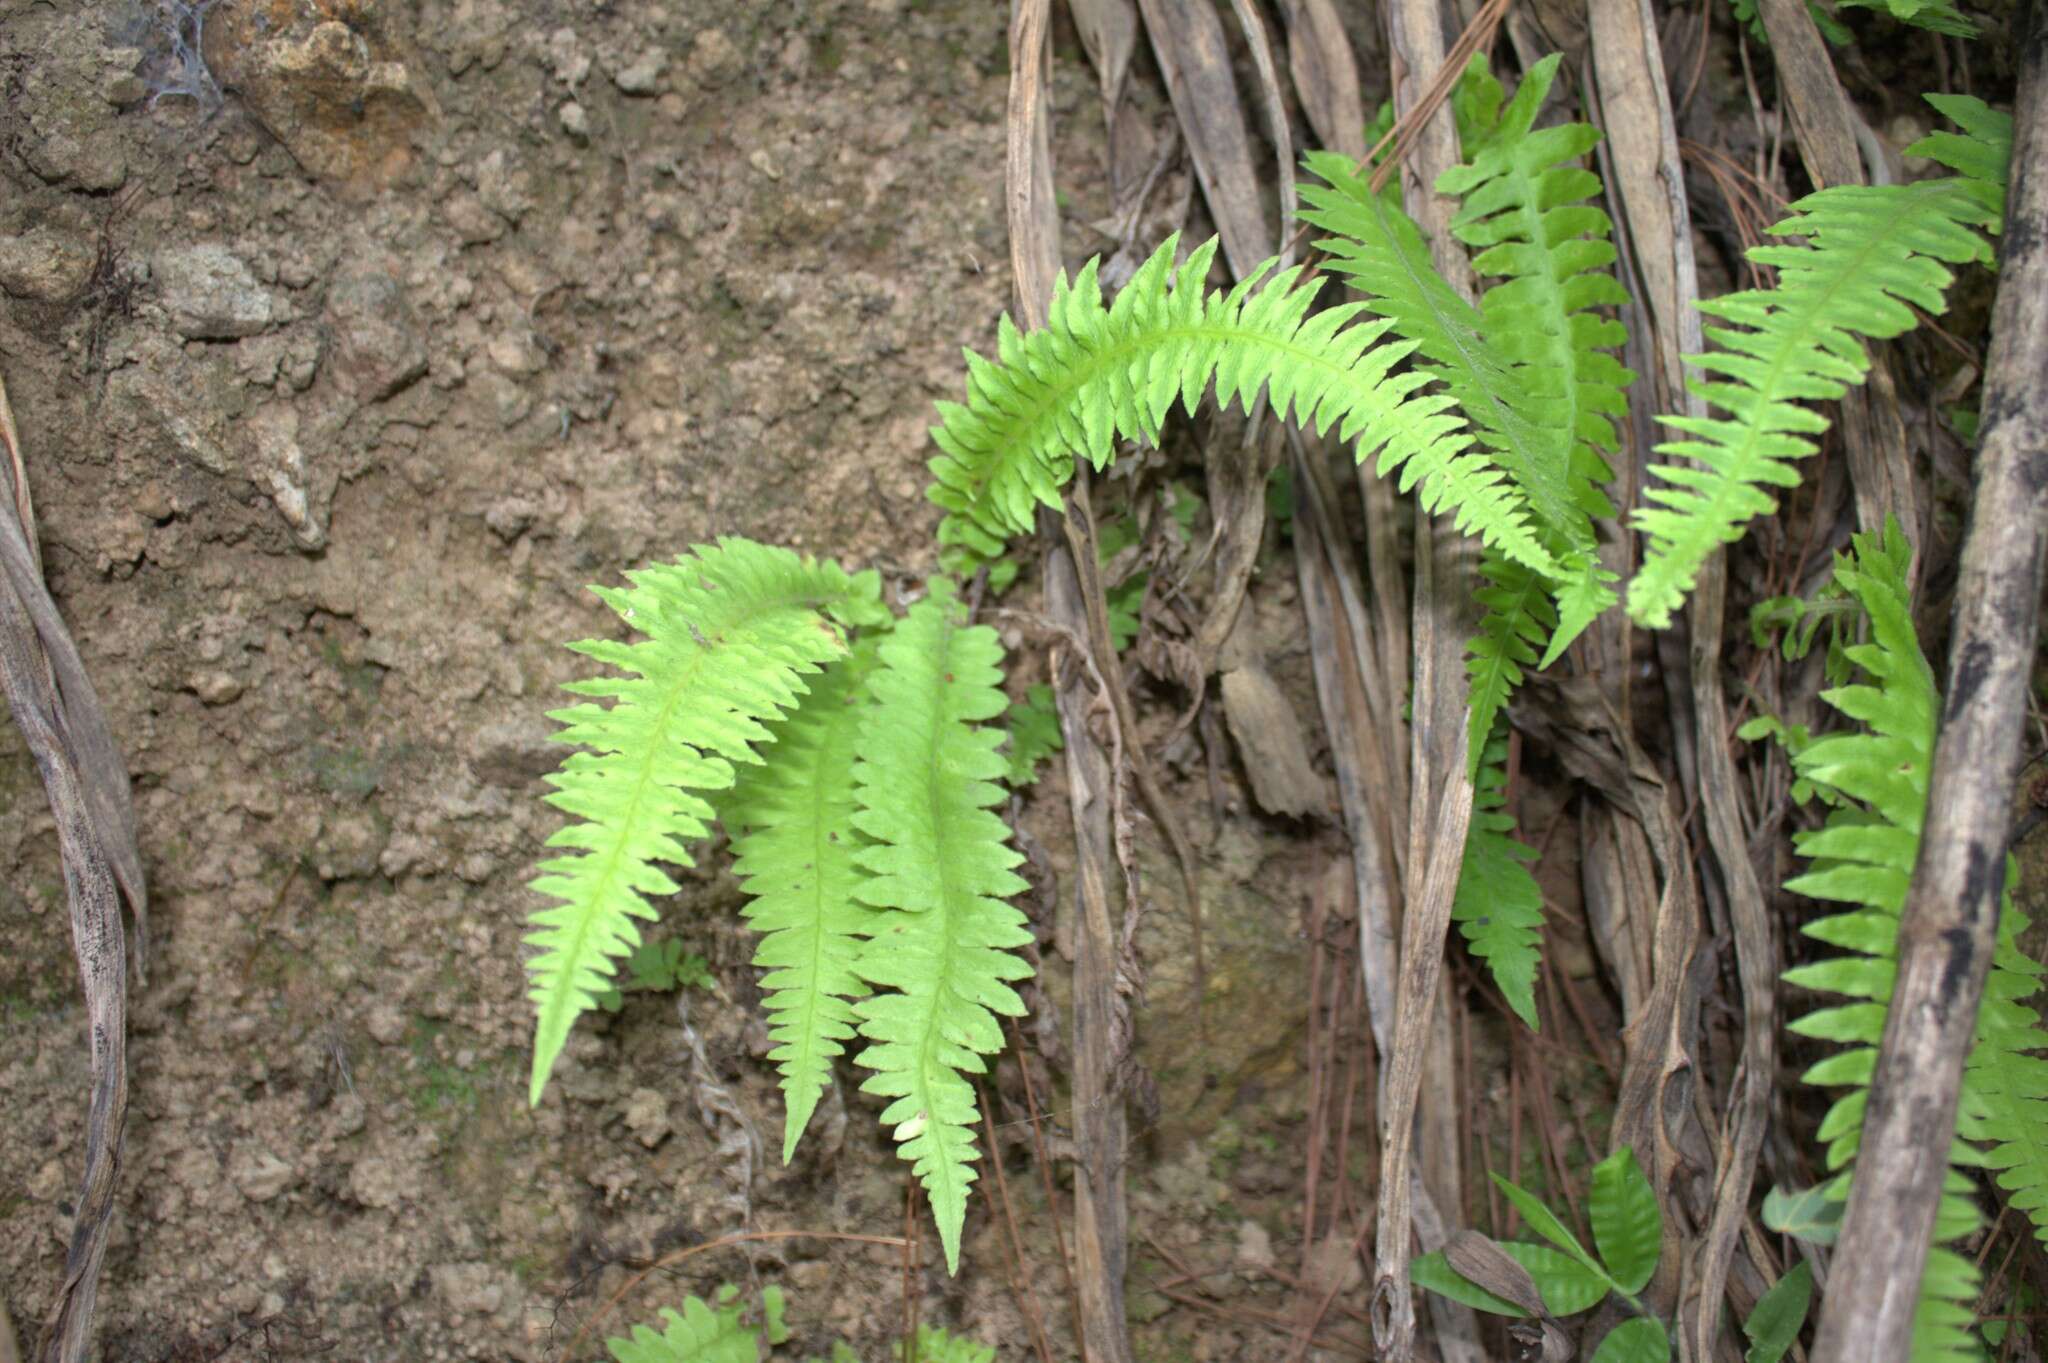 Image of palm fern